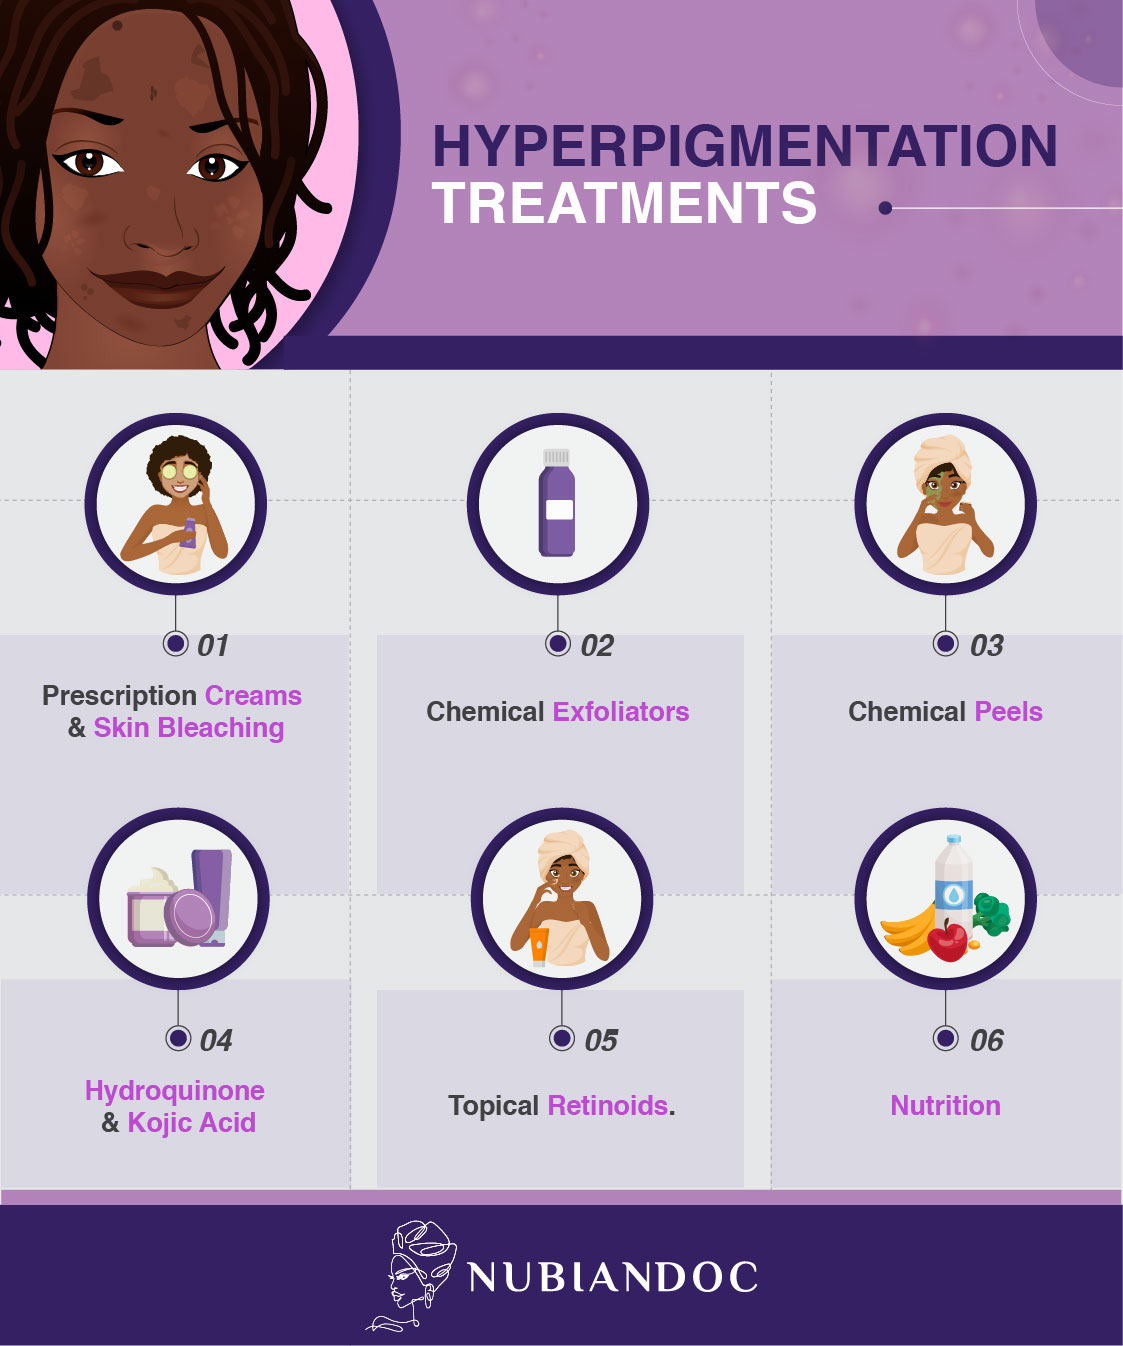 Hyperpigmentation Treatment: How to Get Rid of Dark Spots?